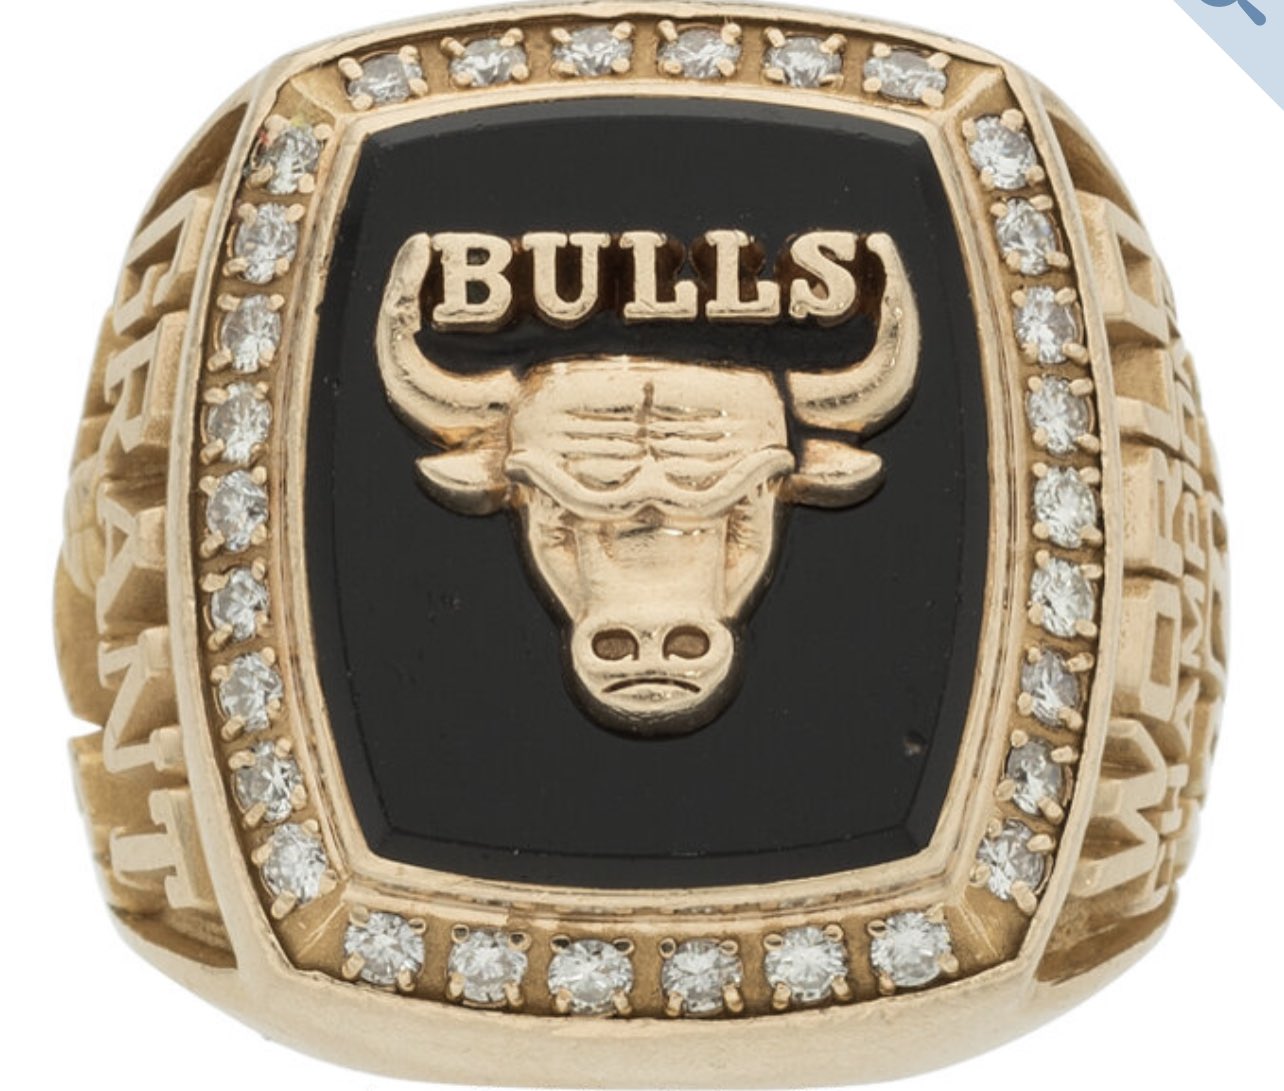 Subastaron tres anillos del primer tricampeonato ganaron los Bulls de Jordan: pagaron por joyas Infobae